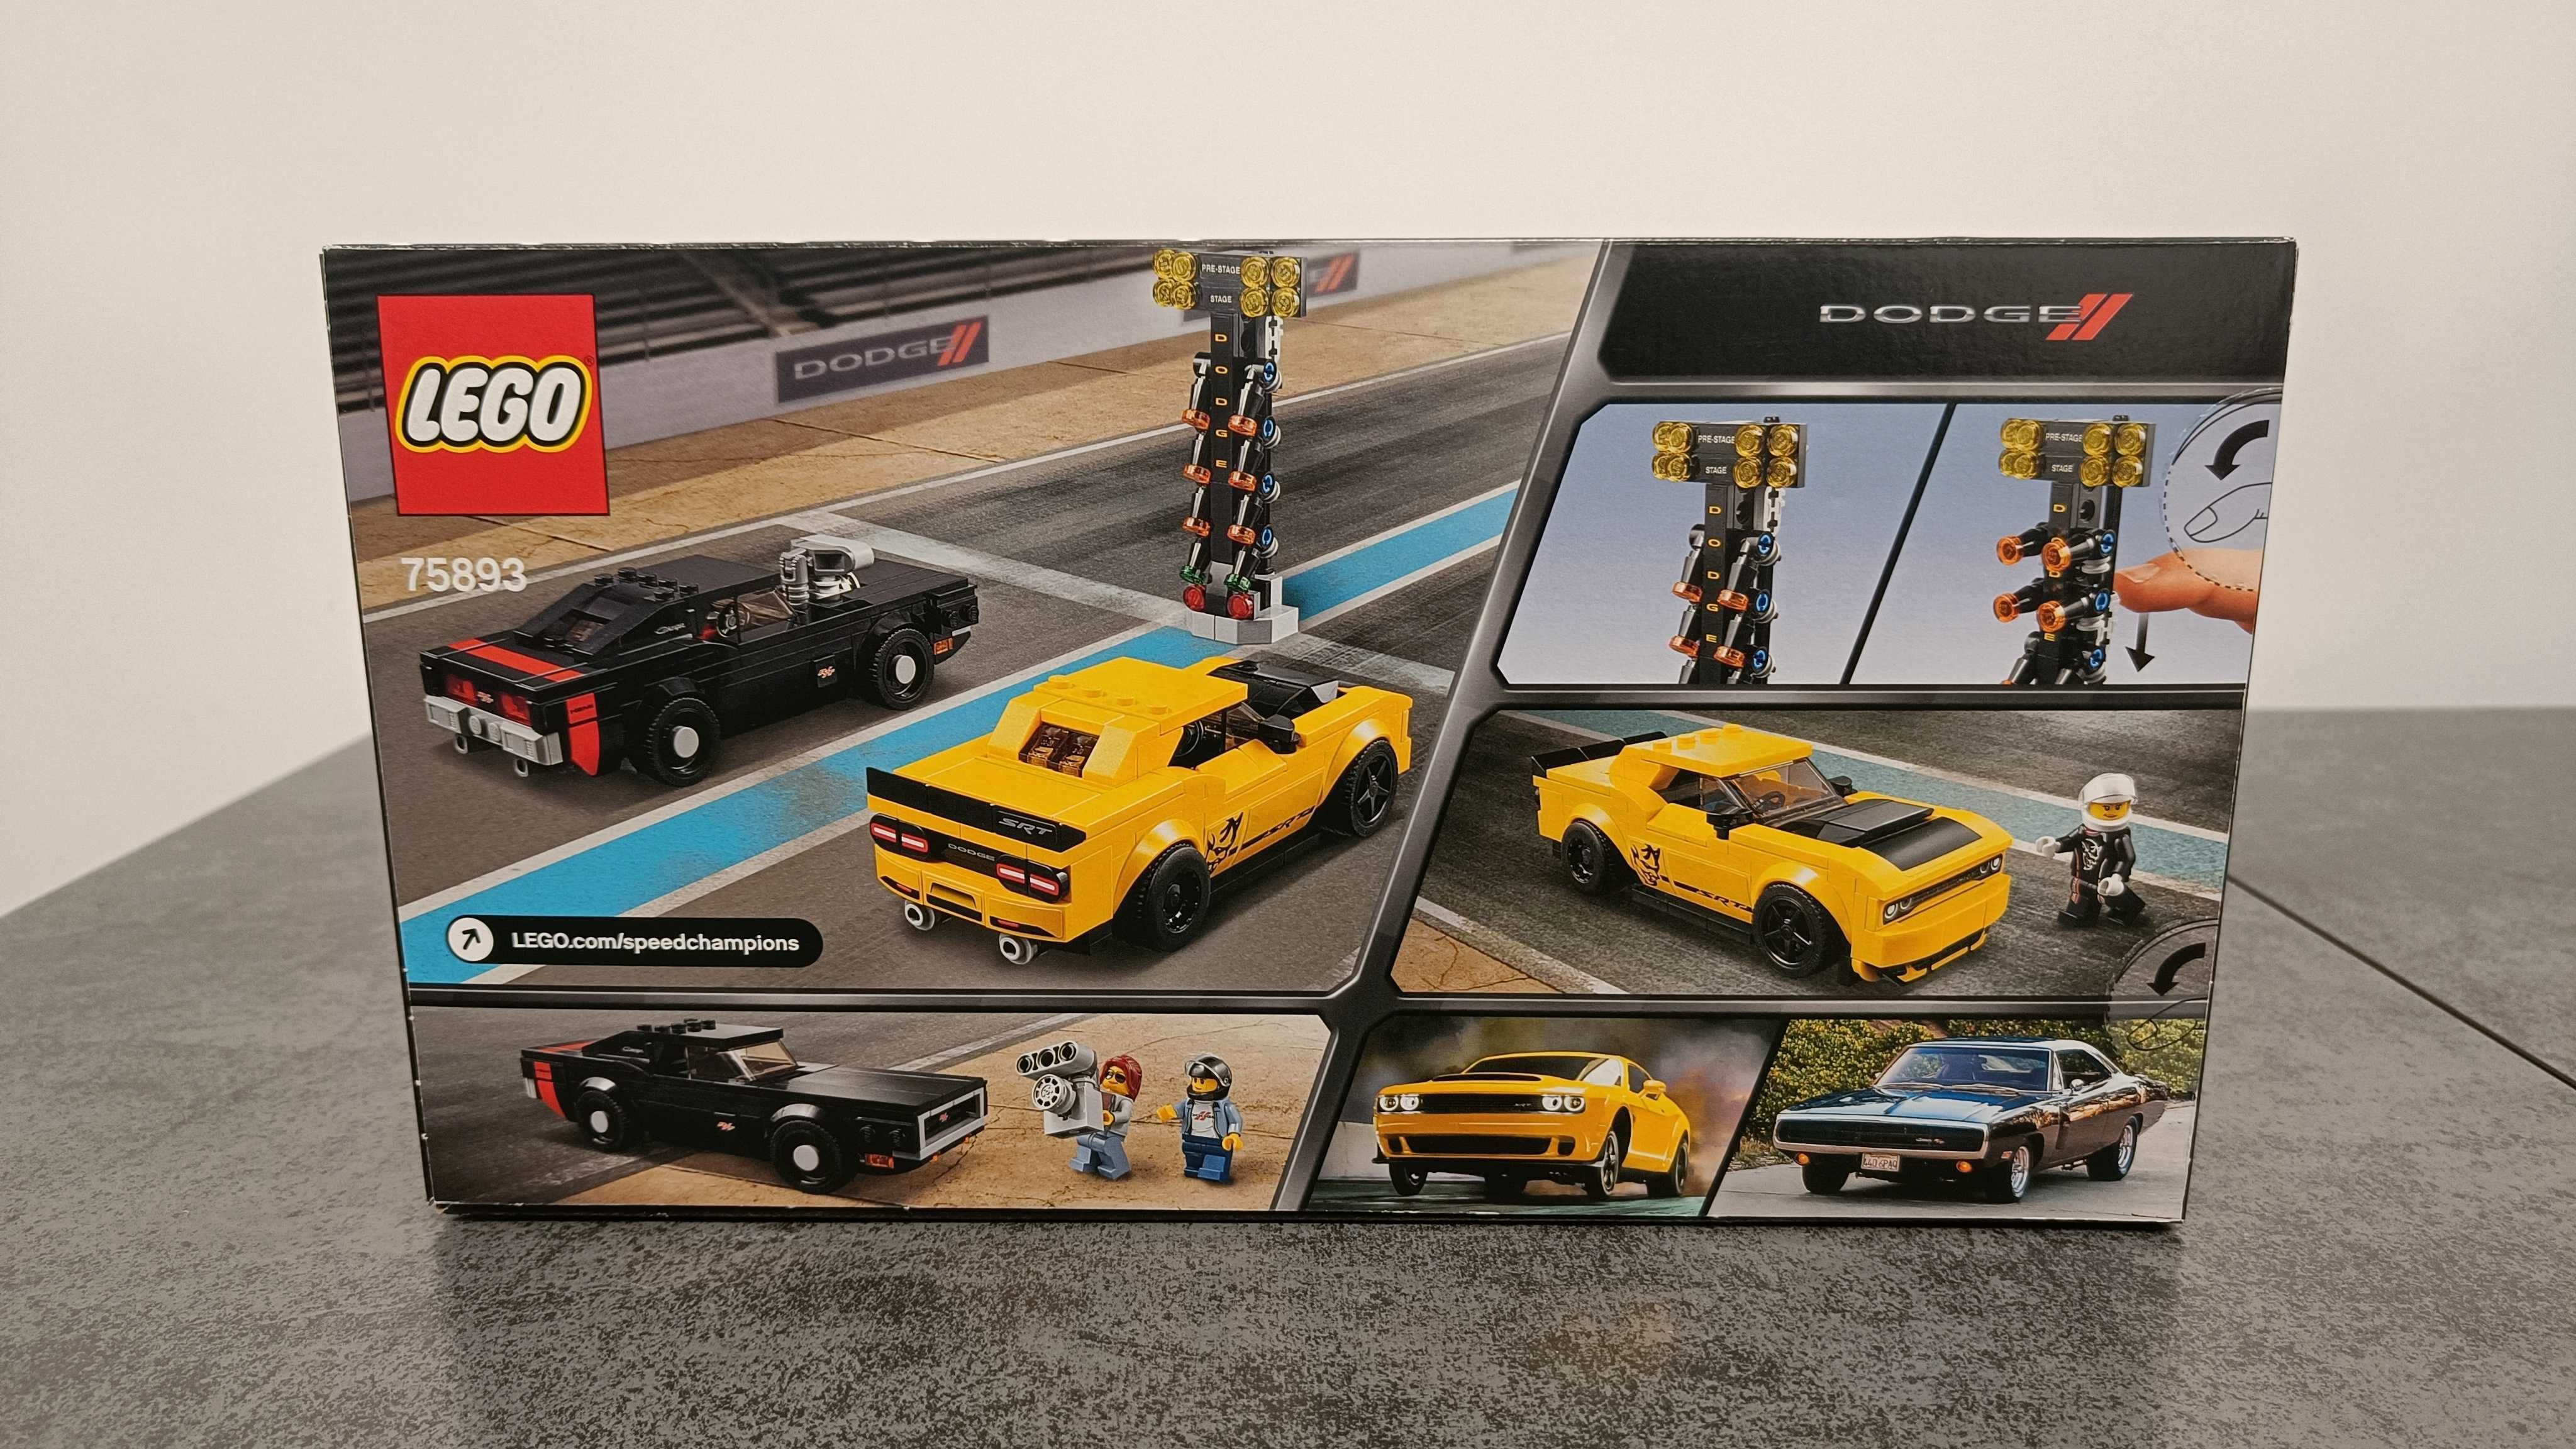 LEGO Speed Champions 75893 - Dodge Set: Challenger SRT & 1970 Charger